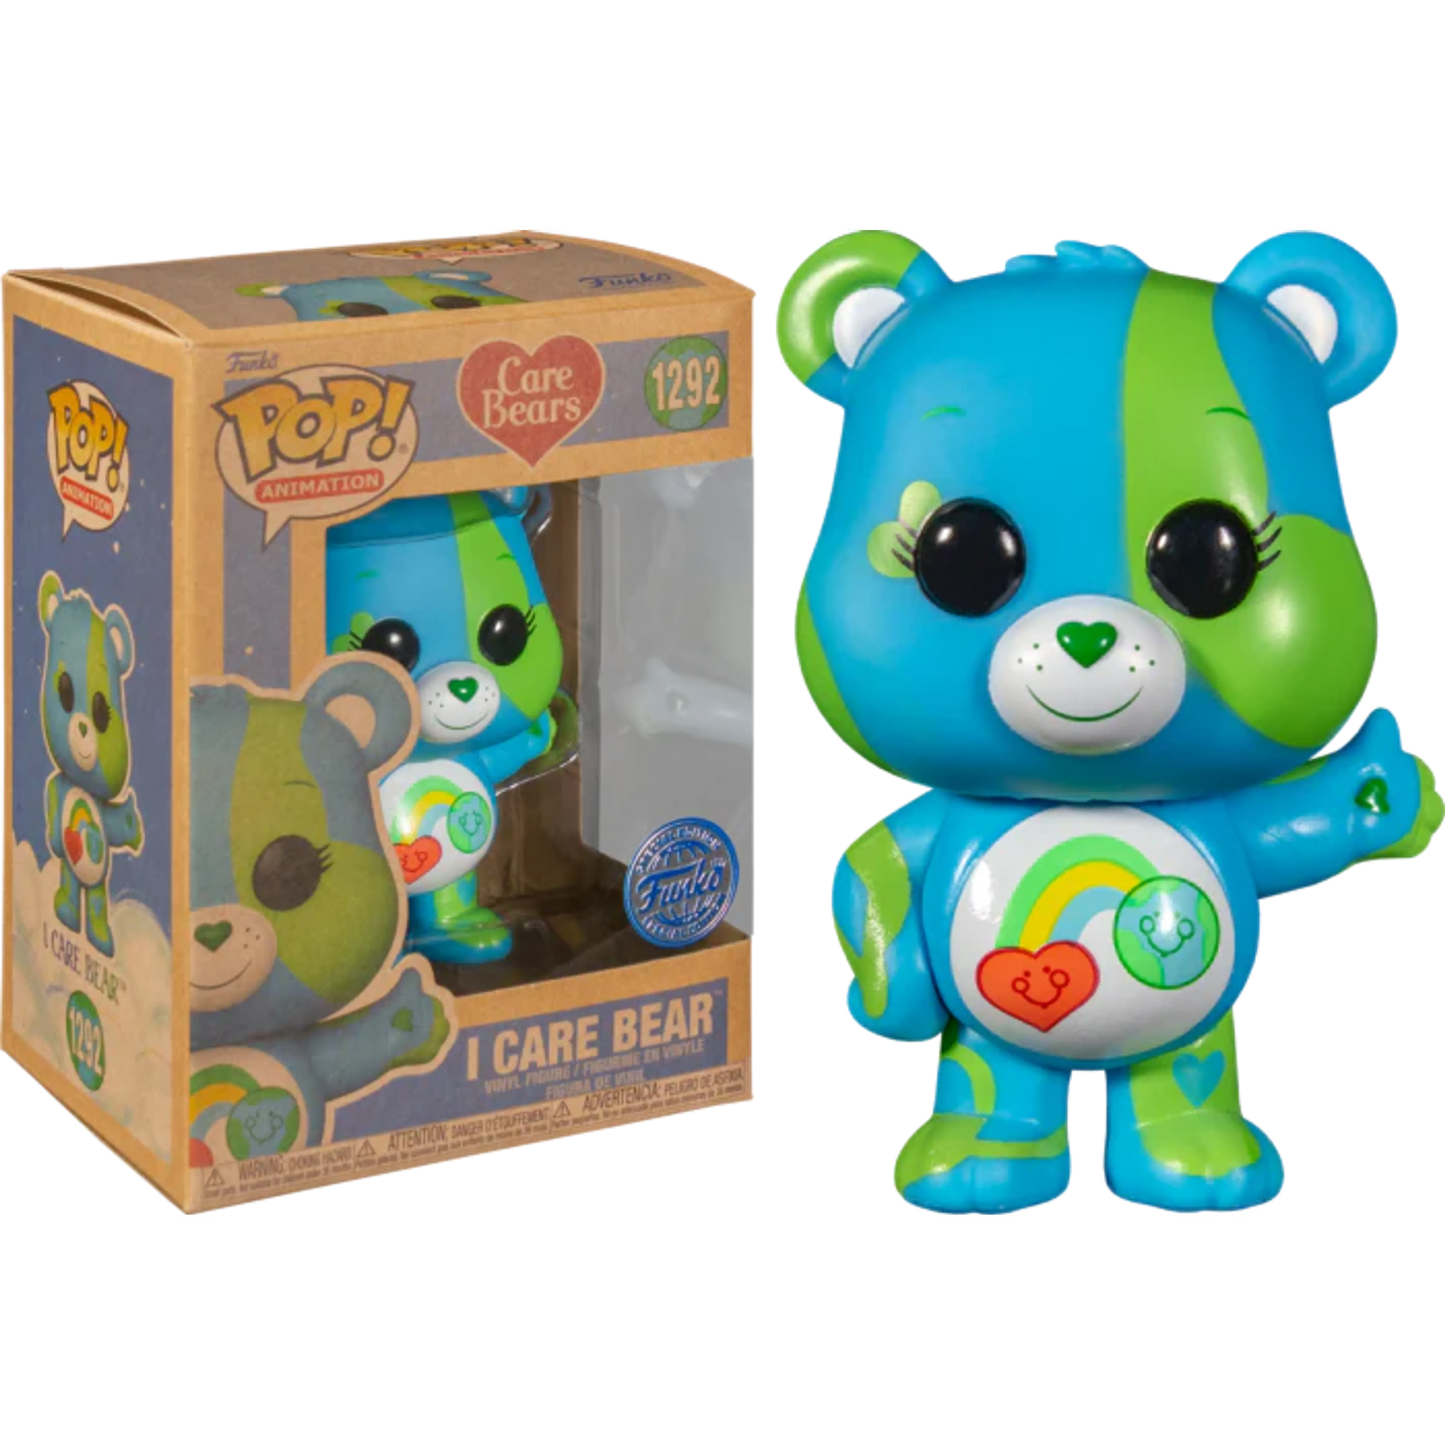 Care Bears: Earth Day 2023 - I Care Bear Funko Pop! (DAMAGED BOX)